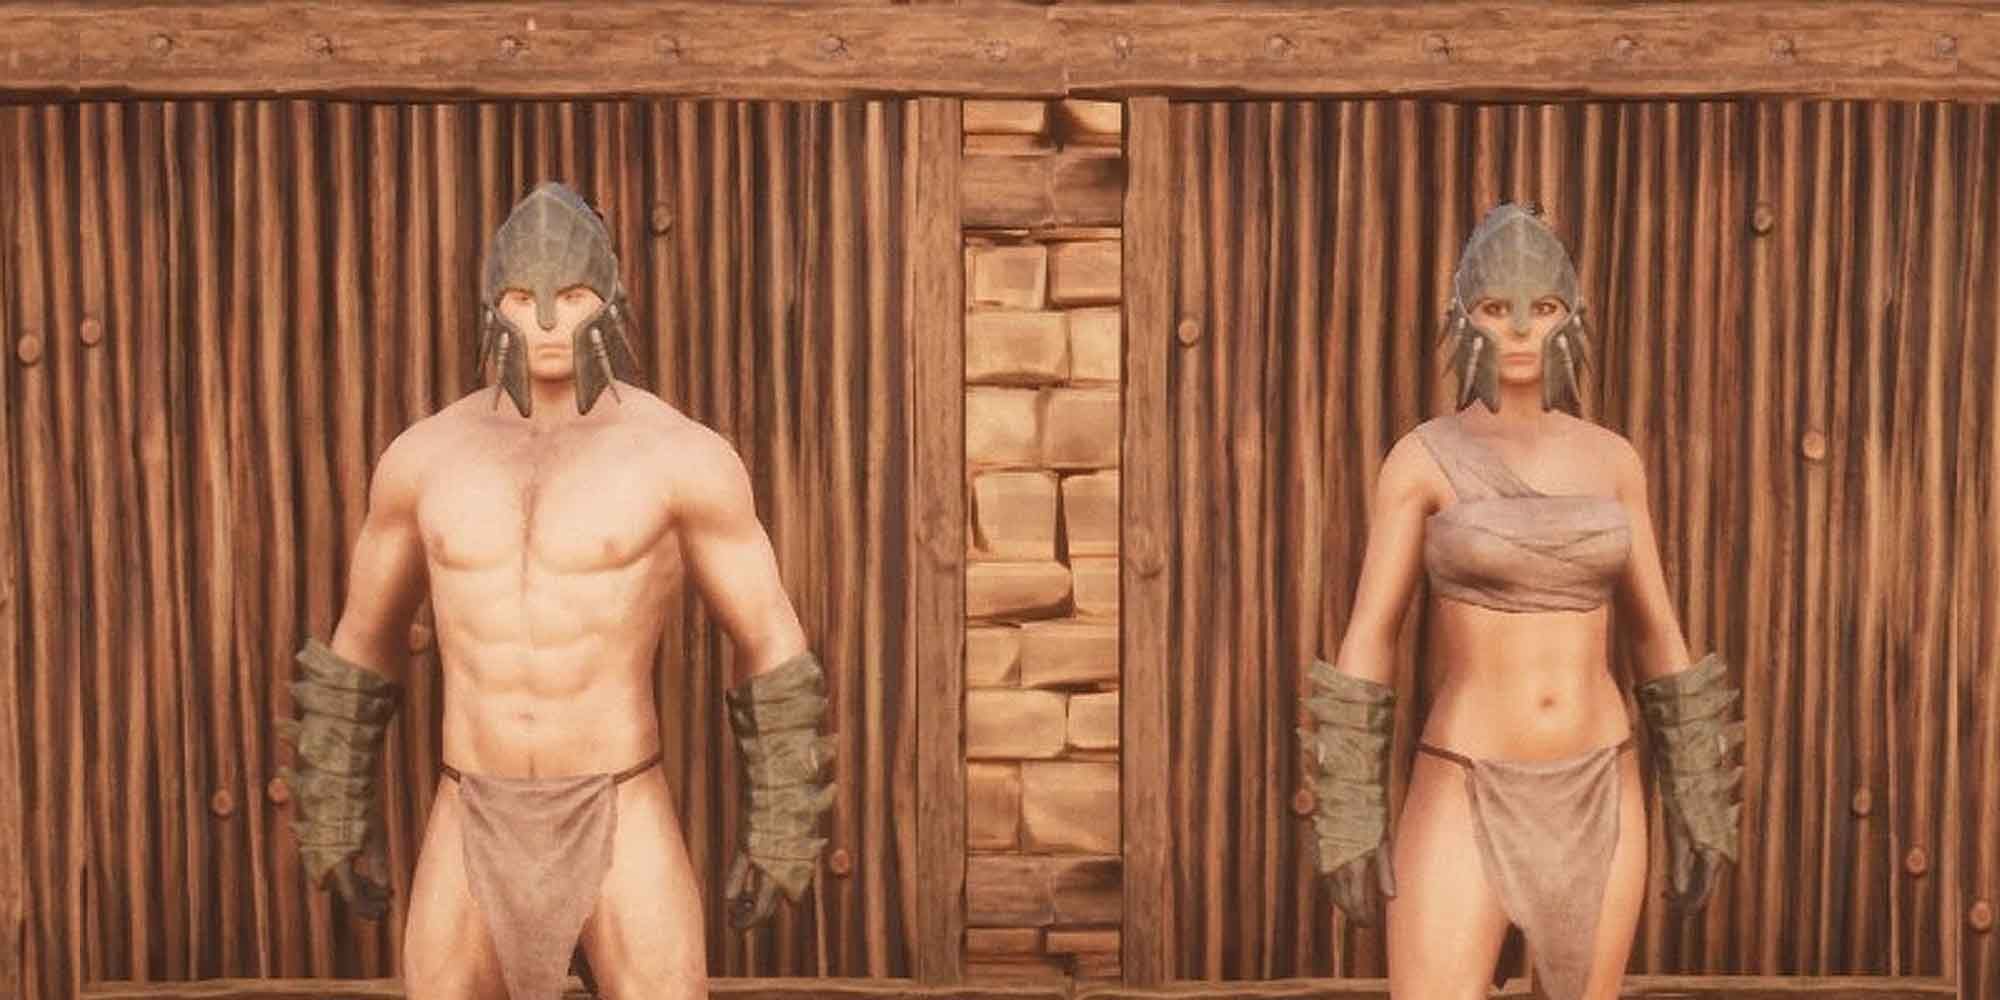 The Brute Helmet and Gauntlets in Conan Exiles